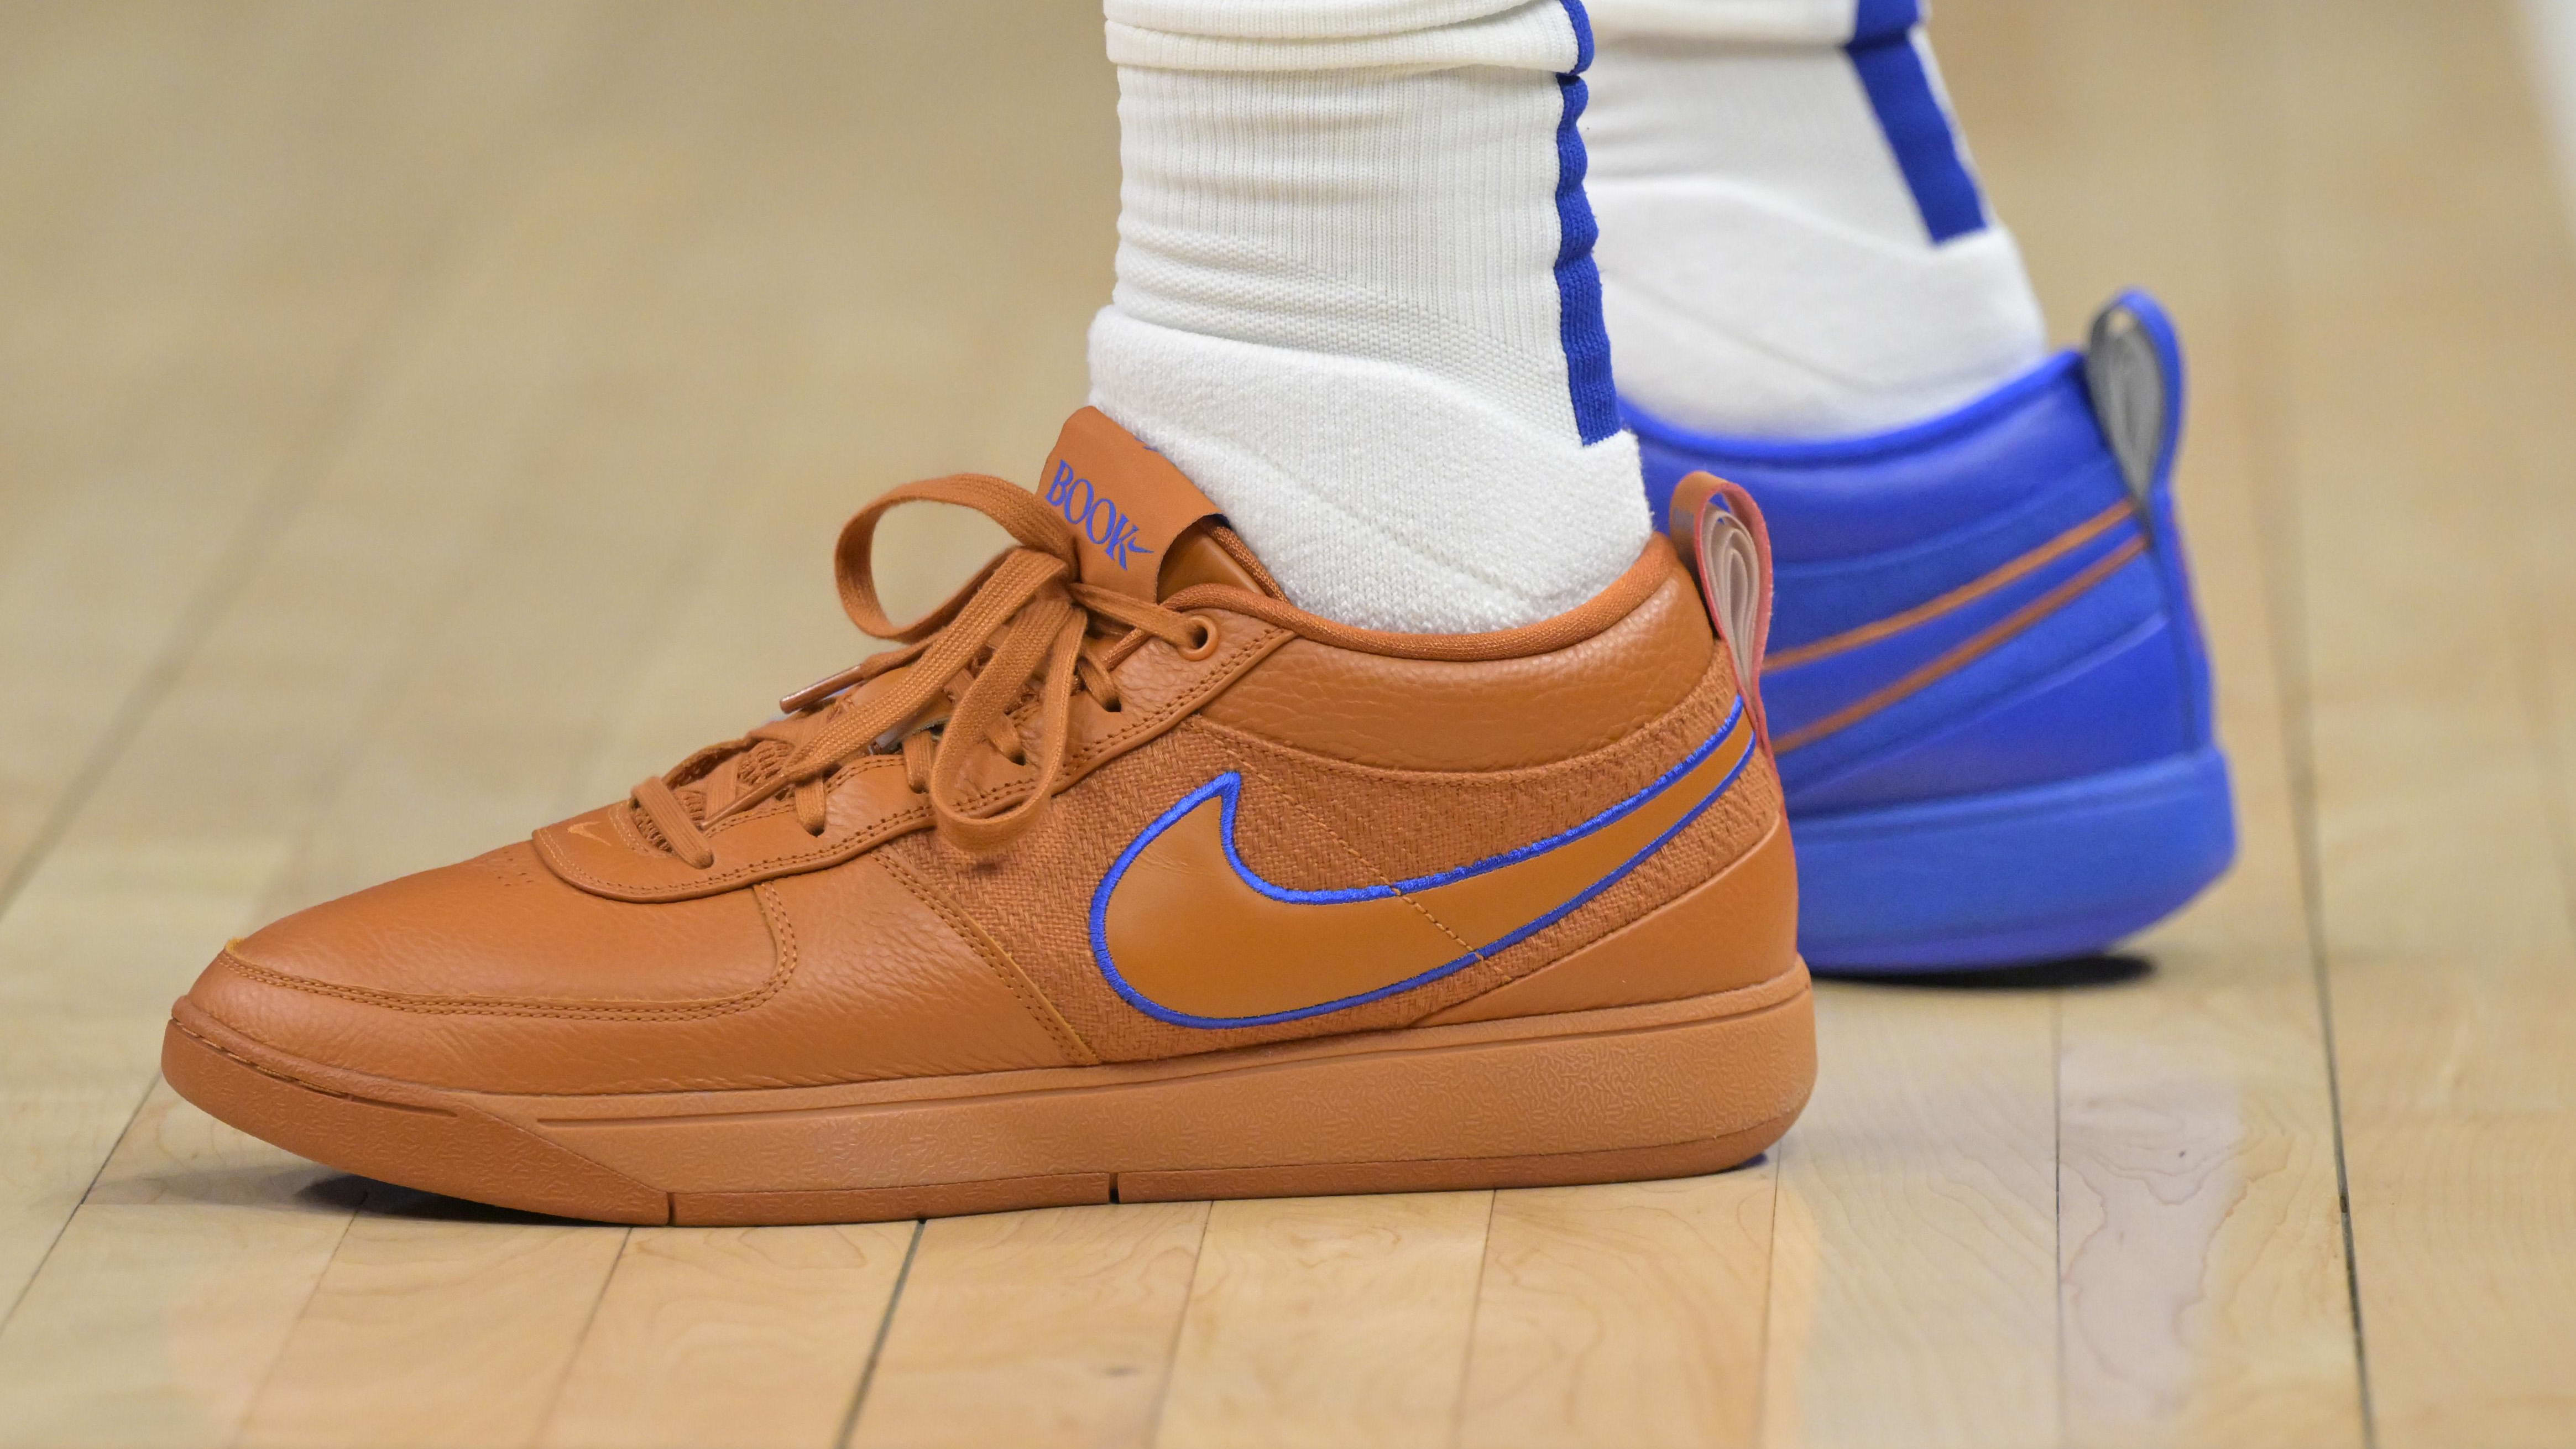 LA Clippers forward P.J. Tucker's orange and blue Nike sneakers.